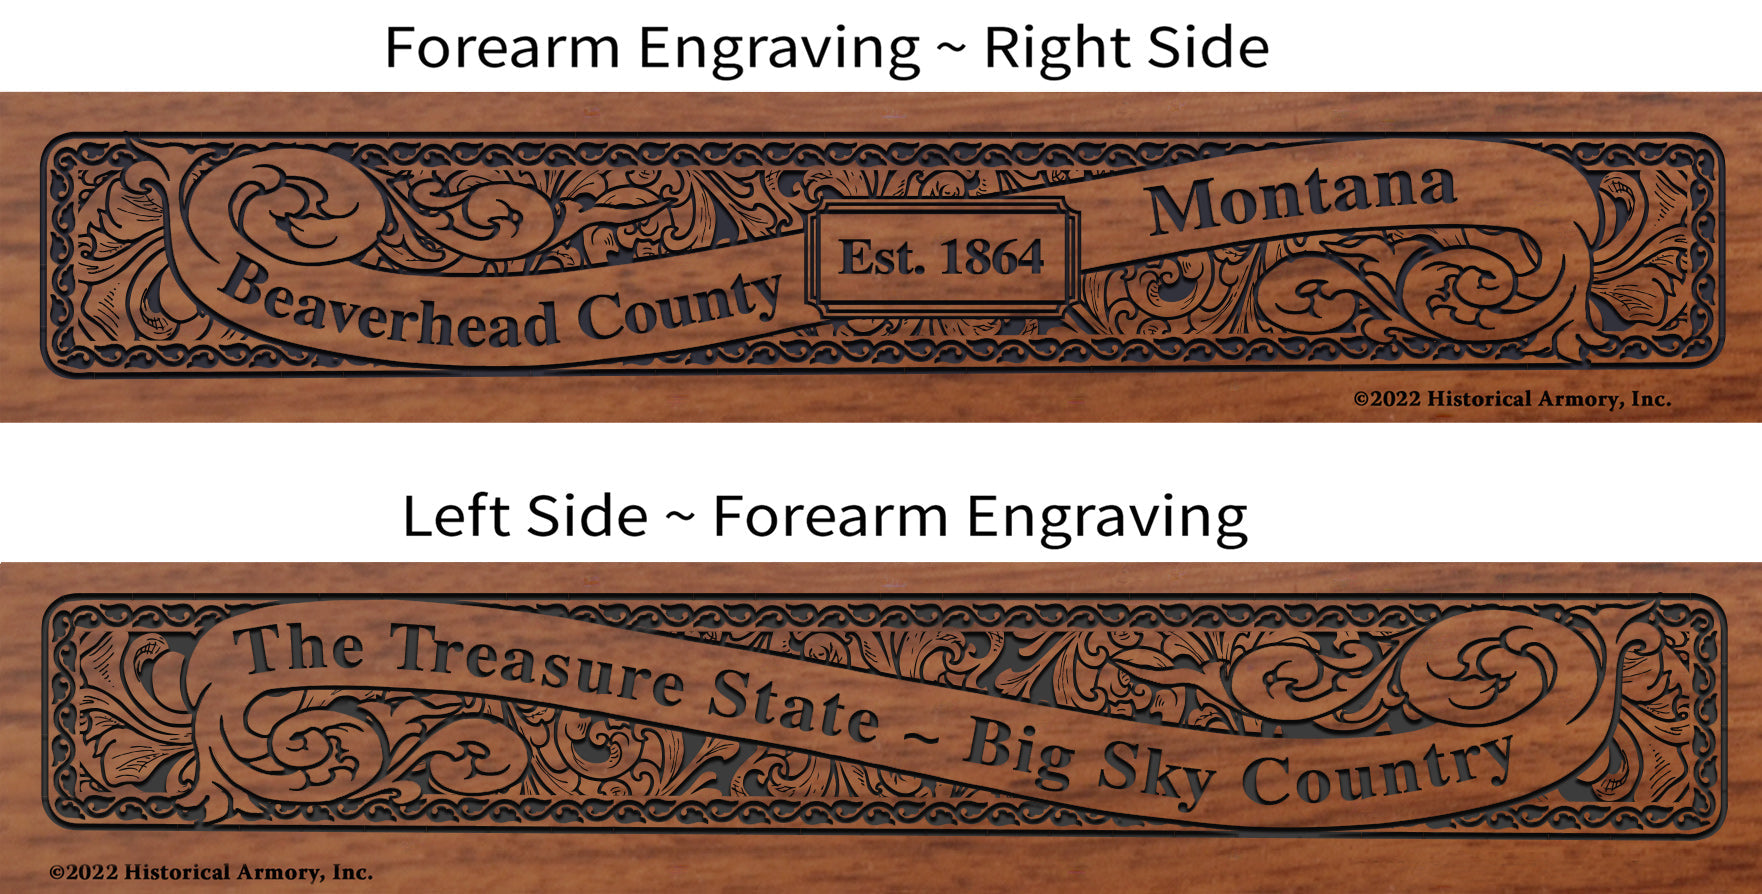 Beaverhead County Montana Engraved Rifle Forearm